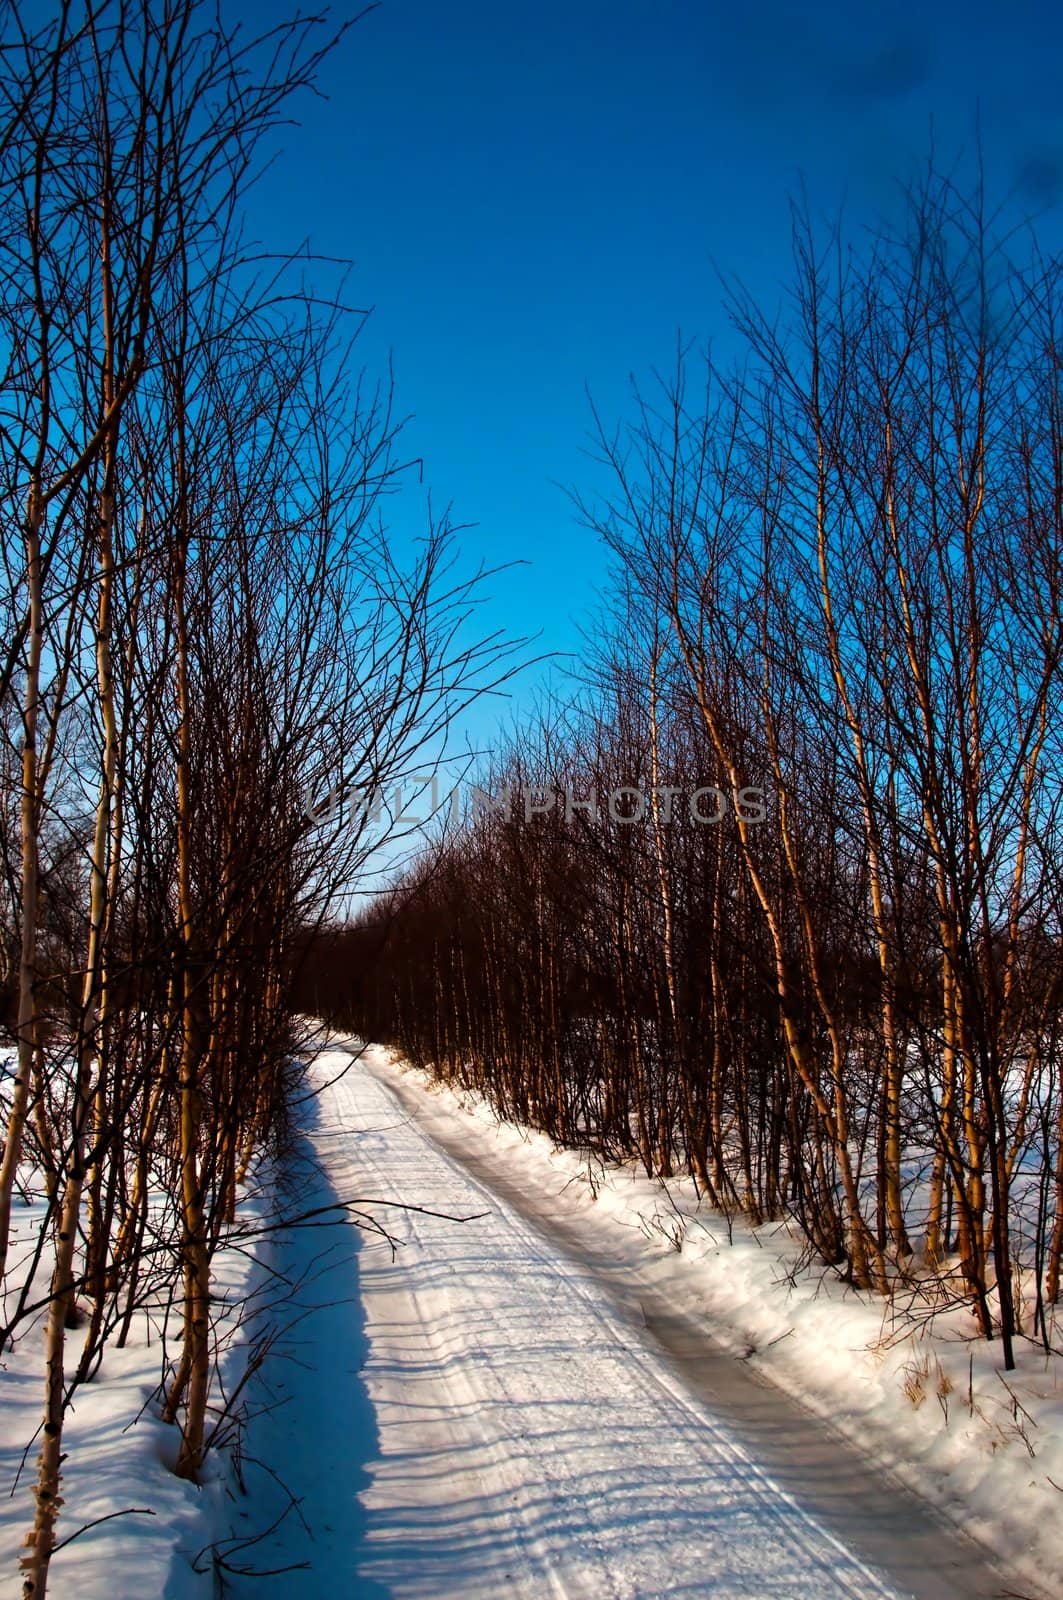 Road through trees by alena0509